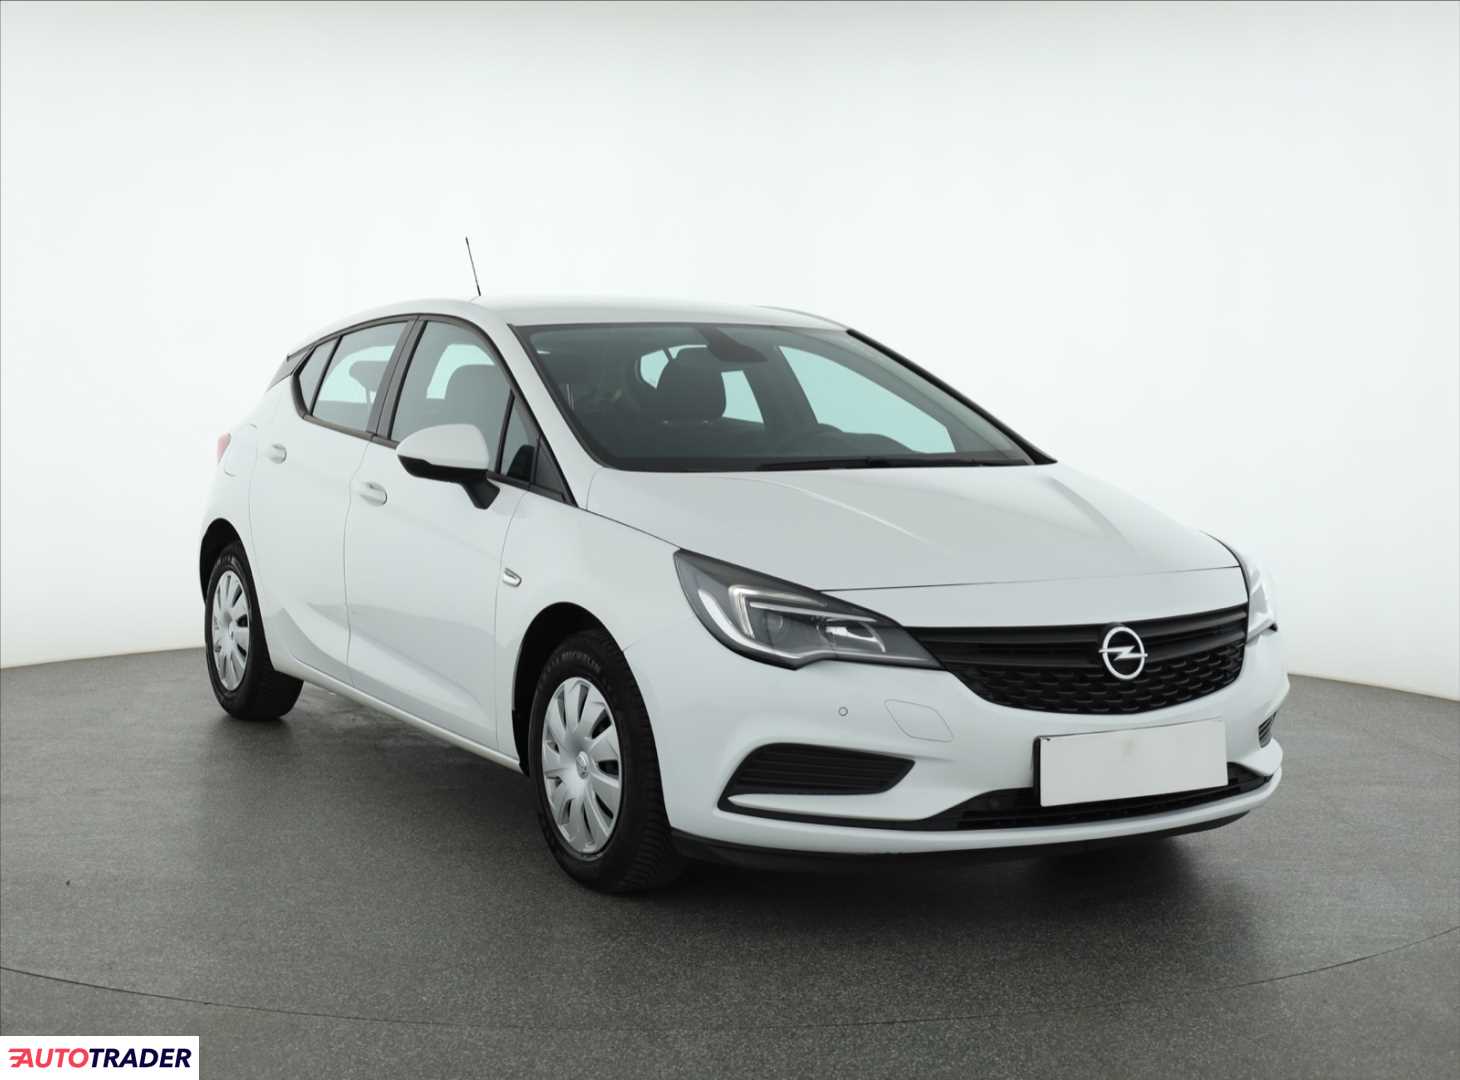 Opel Astra 2016 1.4 99 KM